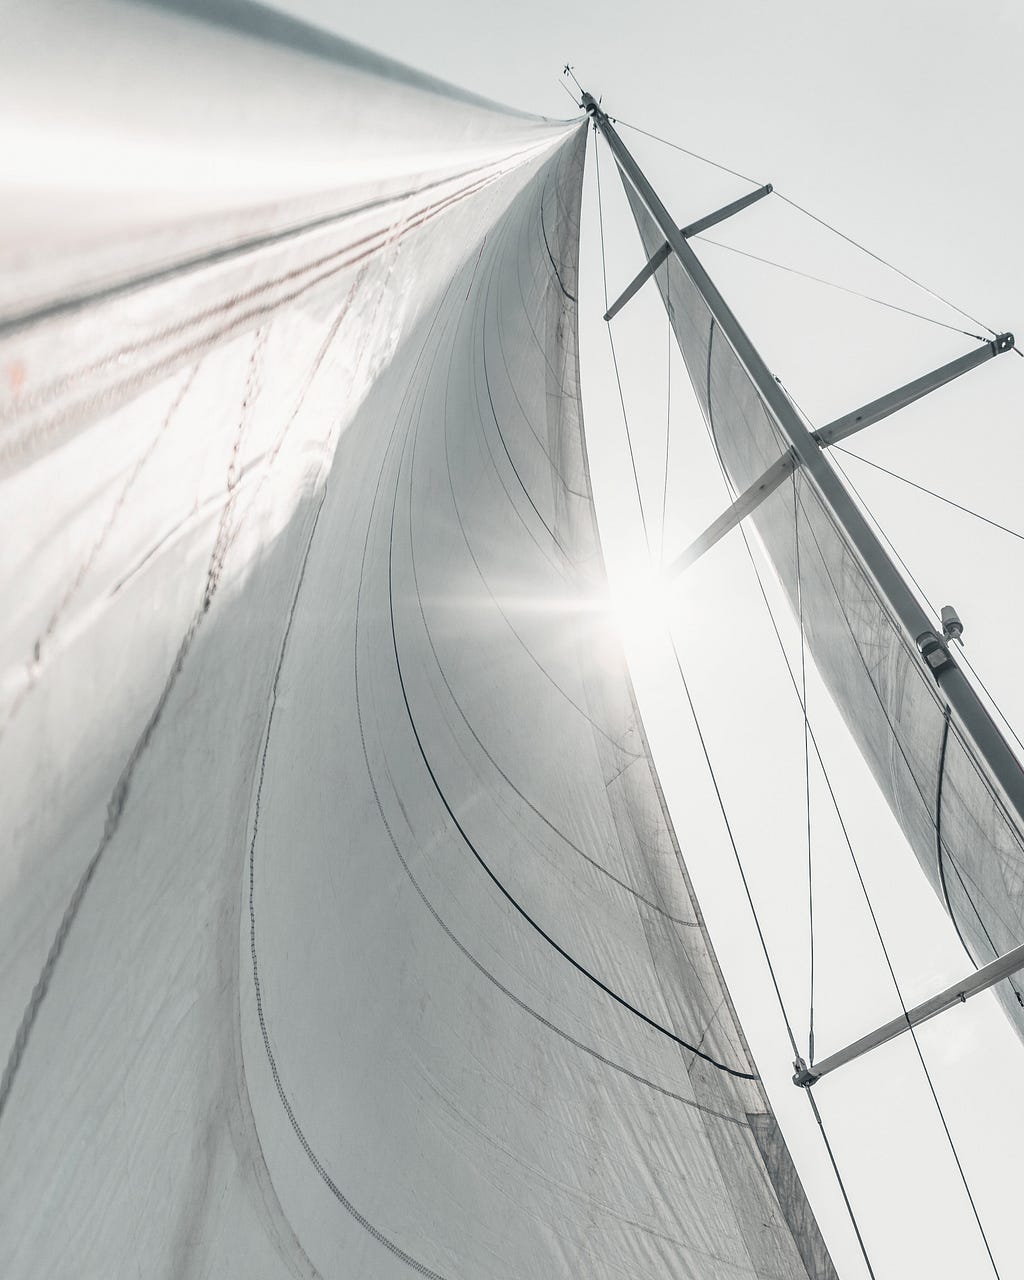 Sailboat sails Photo by Andrea Zignin on Unsplash